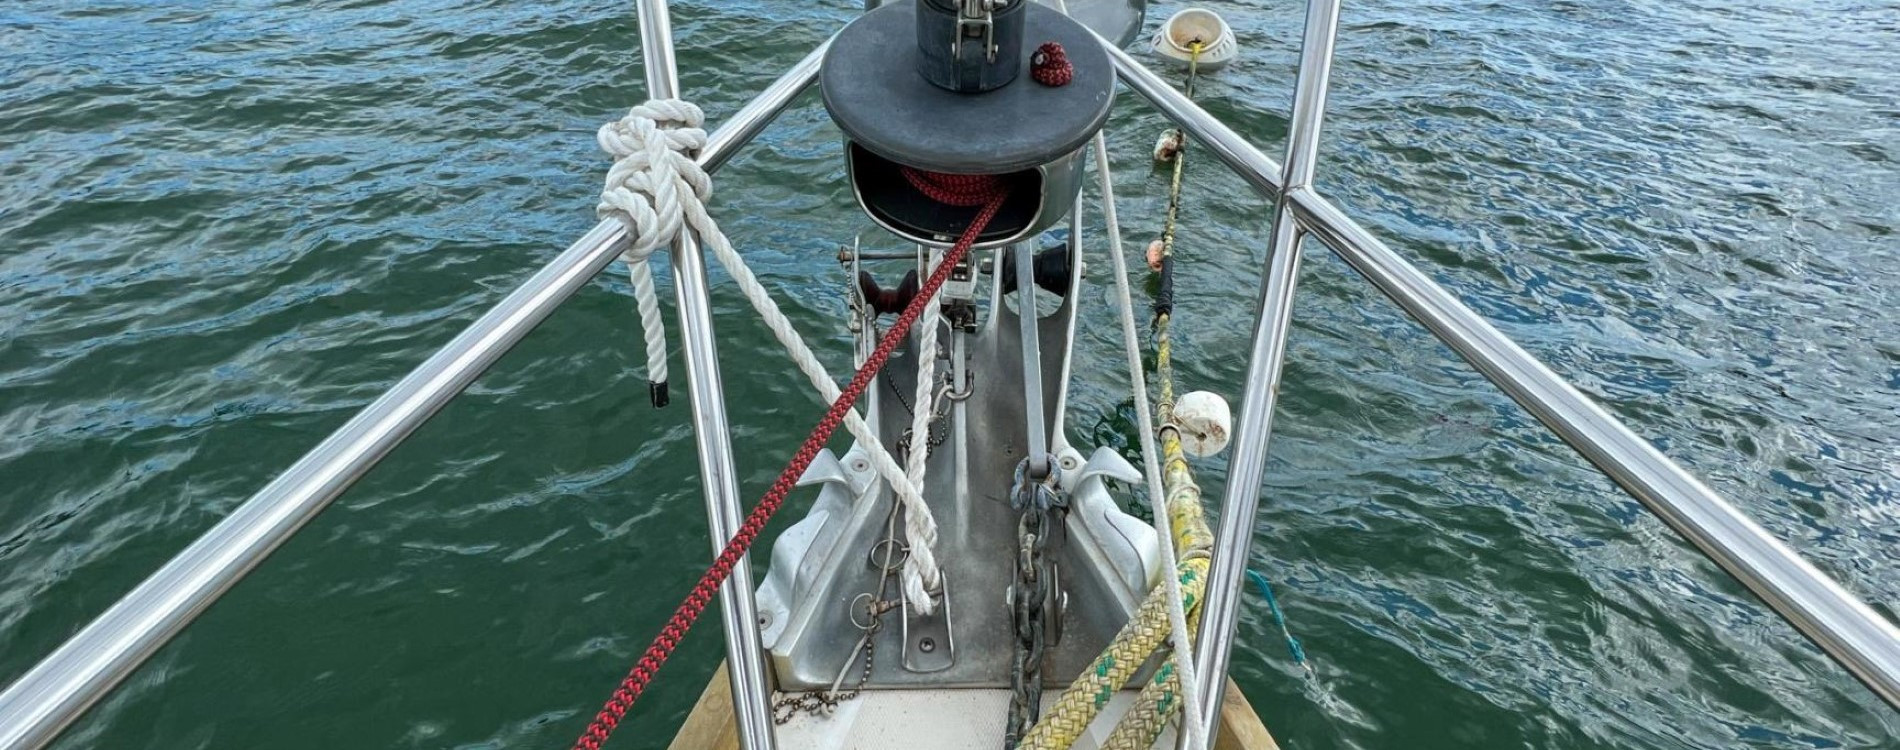 Sailropes Marine Products